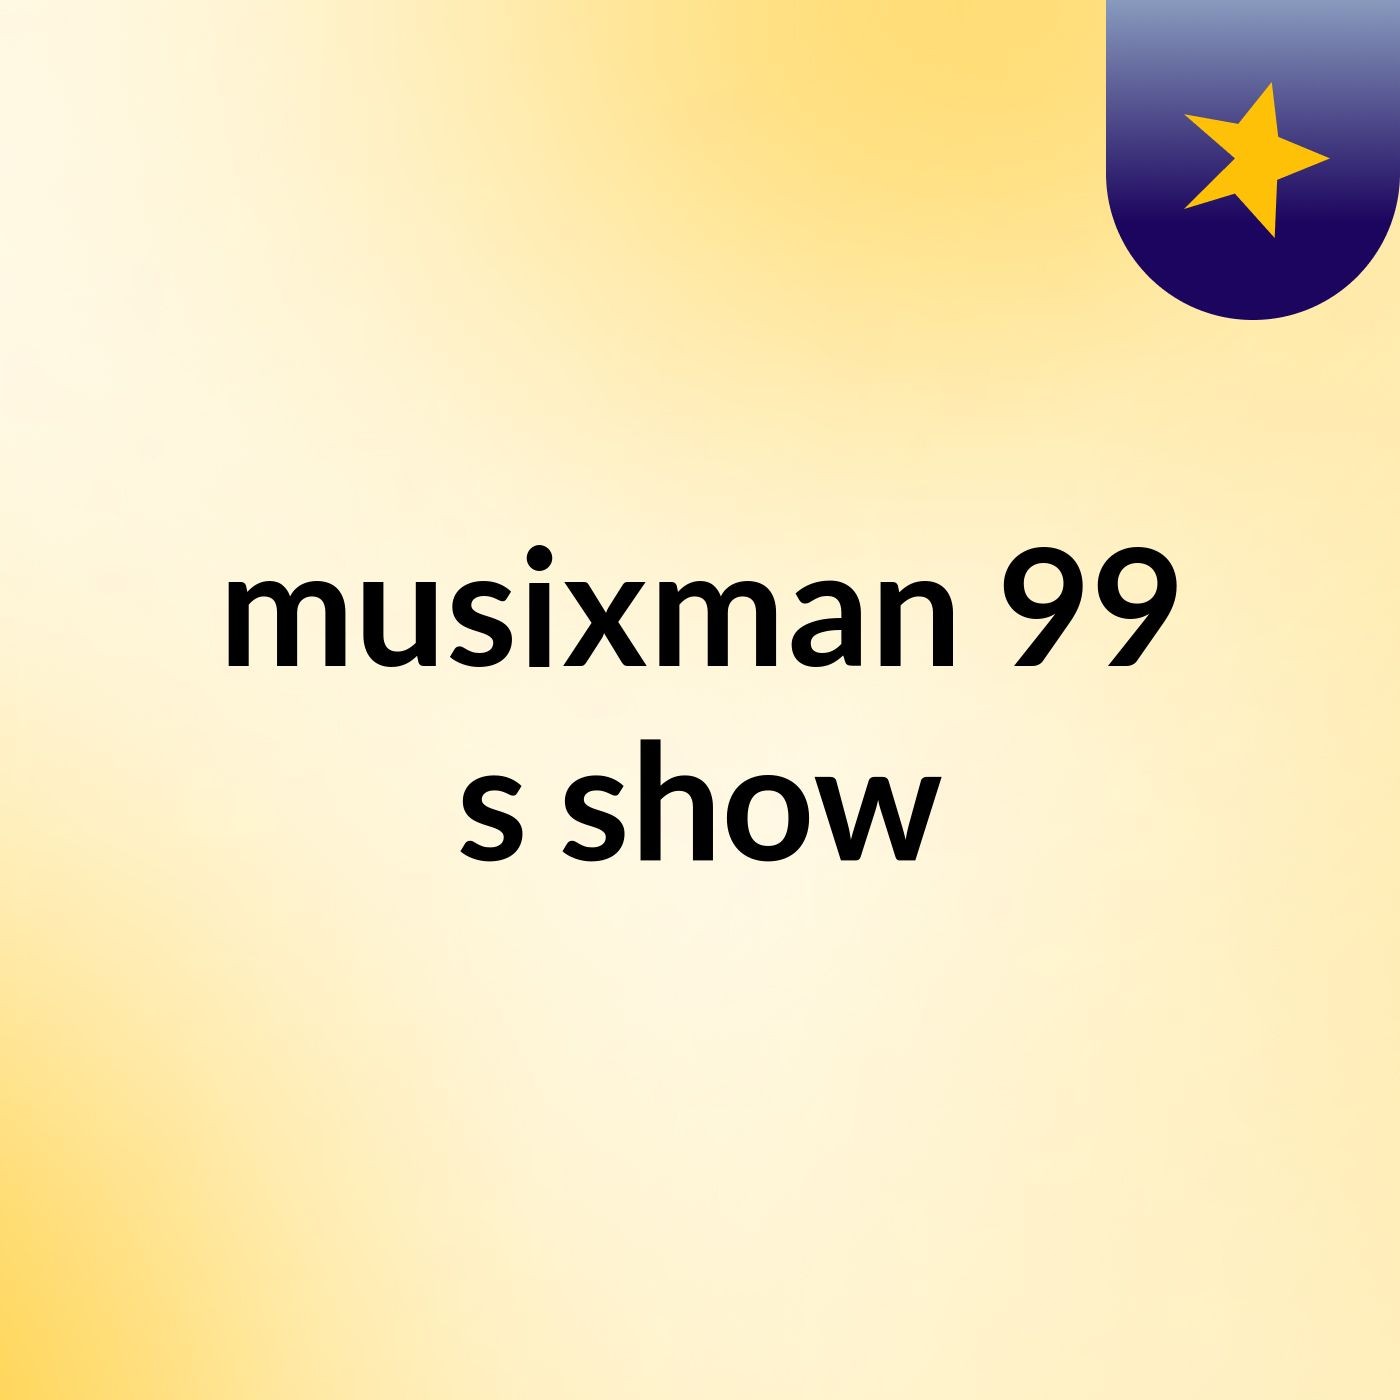 musixman 99's show